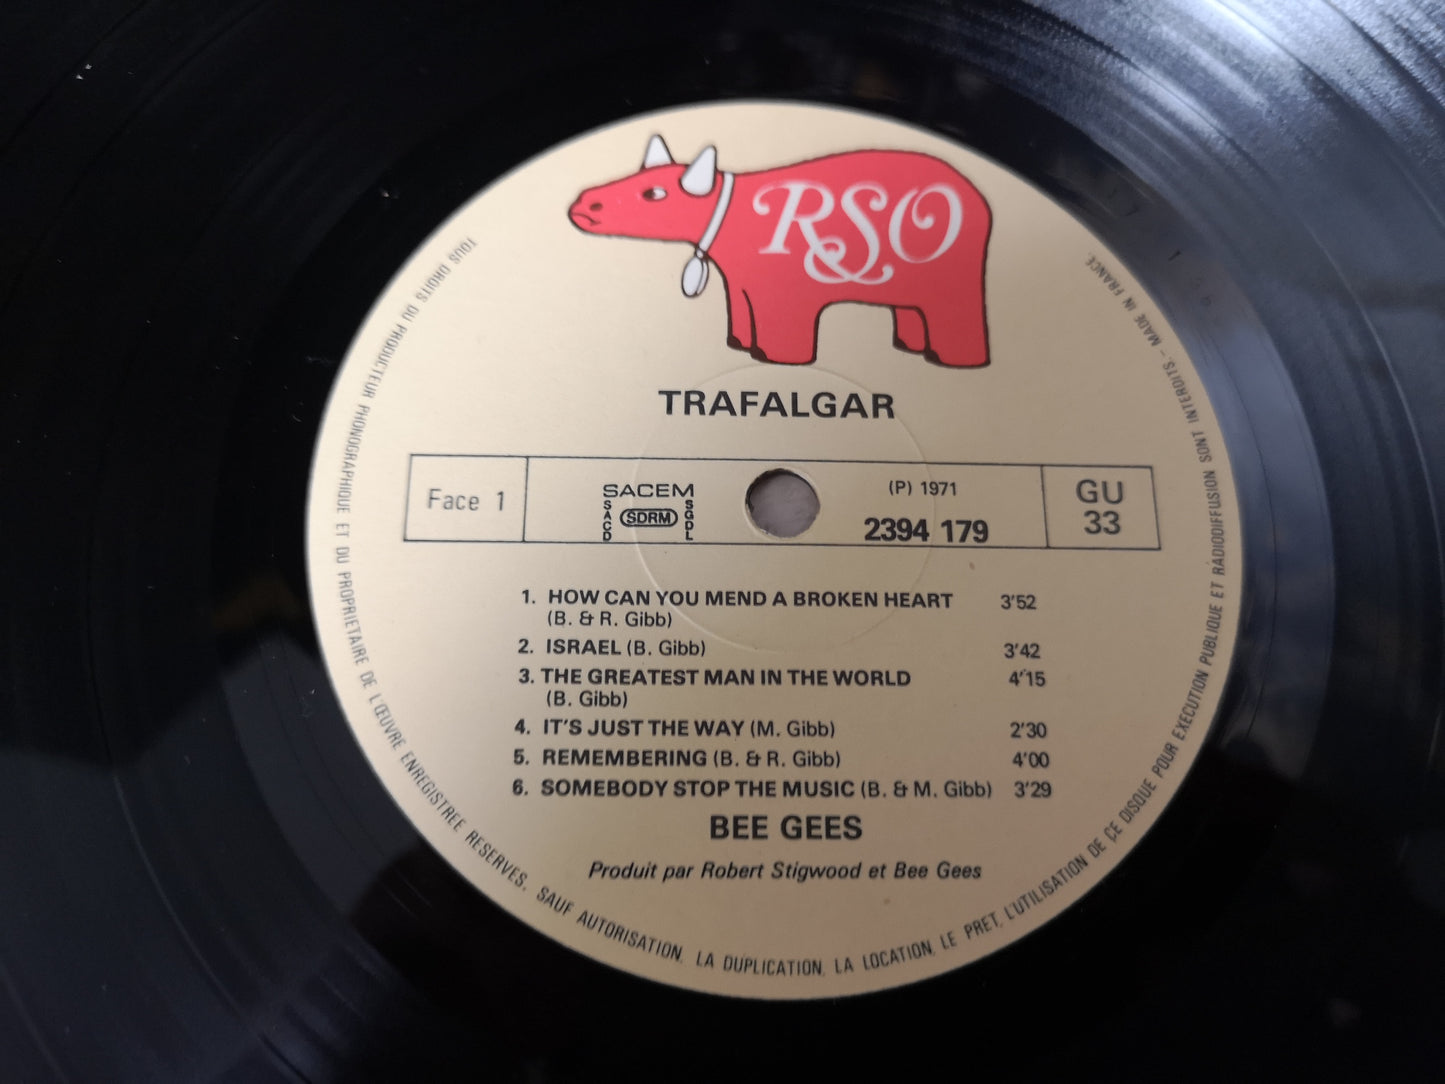 Bee Gees "Trafalgar" RE France 1976 M-/VG